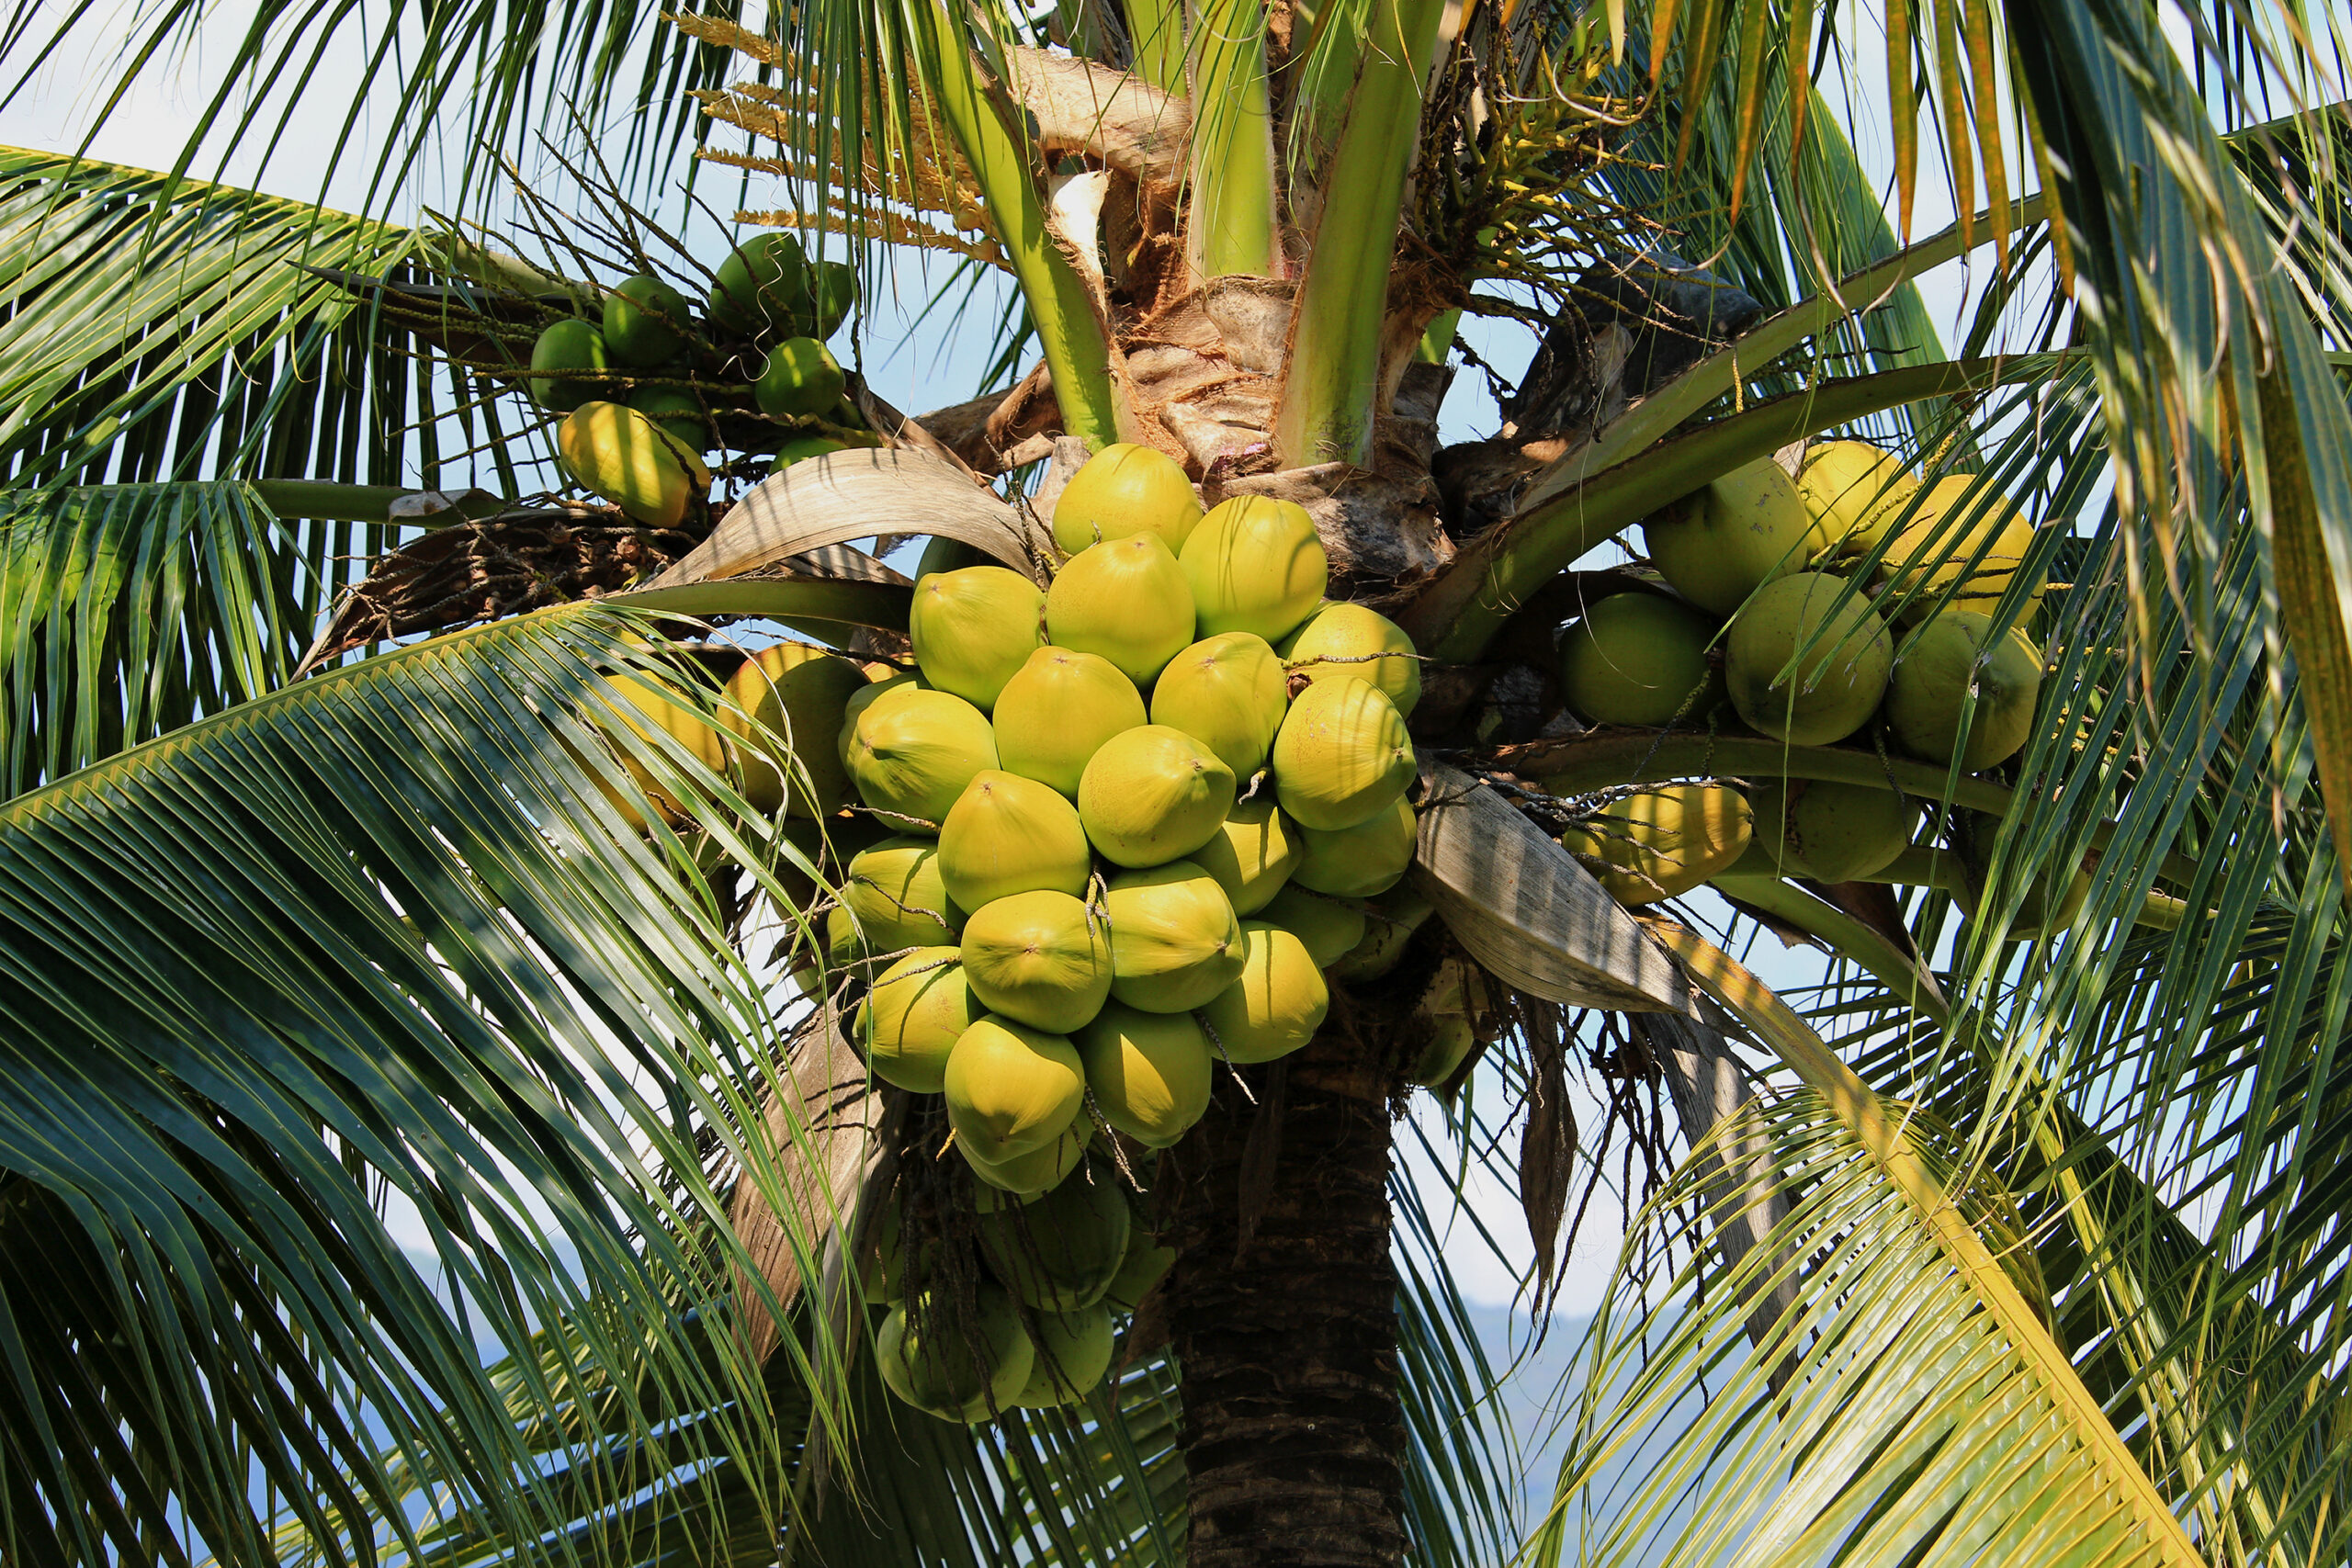 Vietnamese coconuts | https://fruitsauction.com/